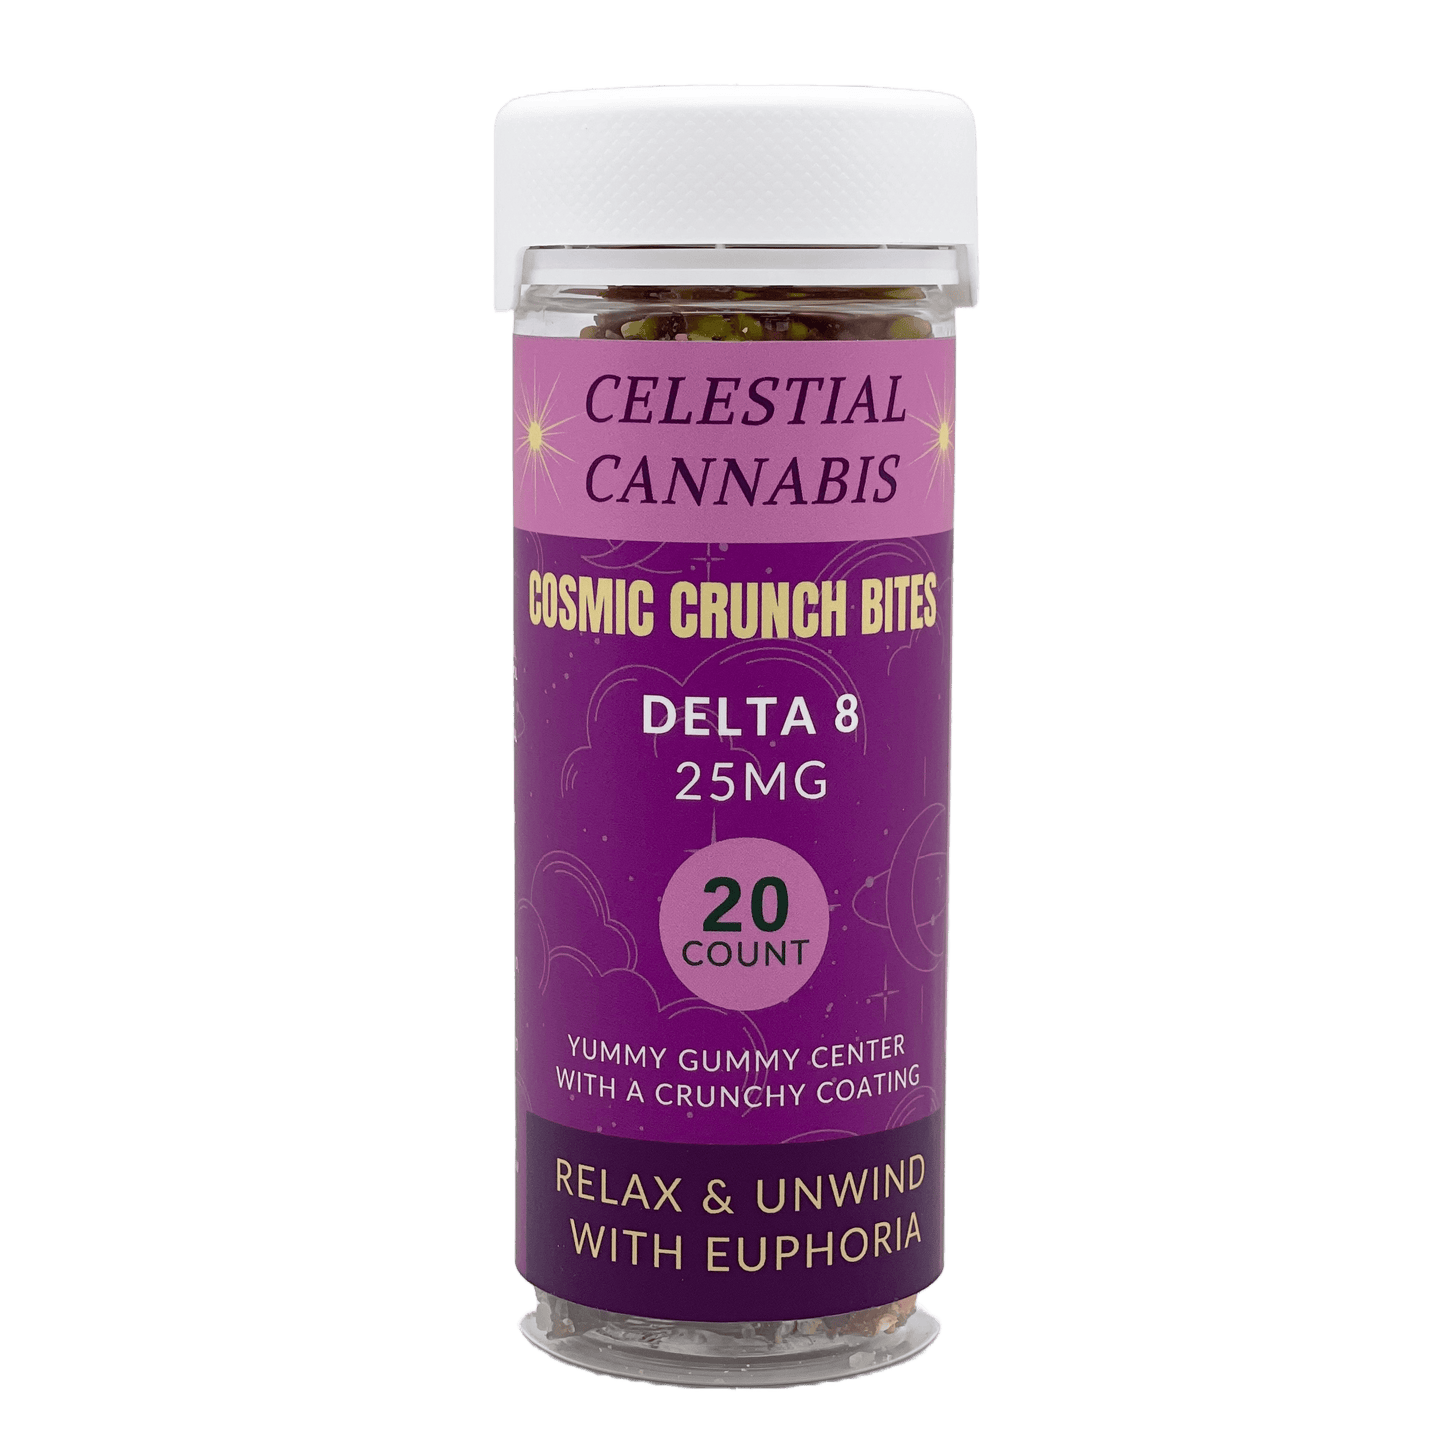 Celestial Cannabis Delta 8 Cosmic Crunch Bites 20ct